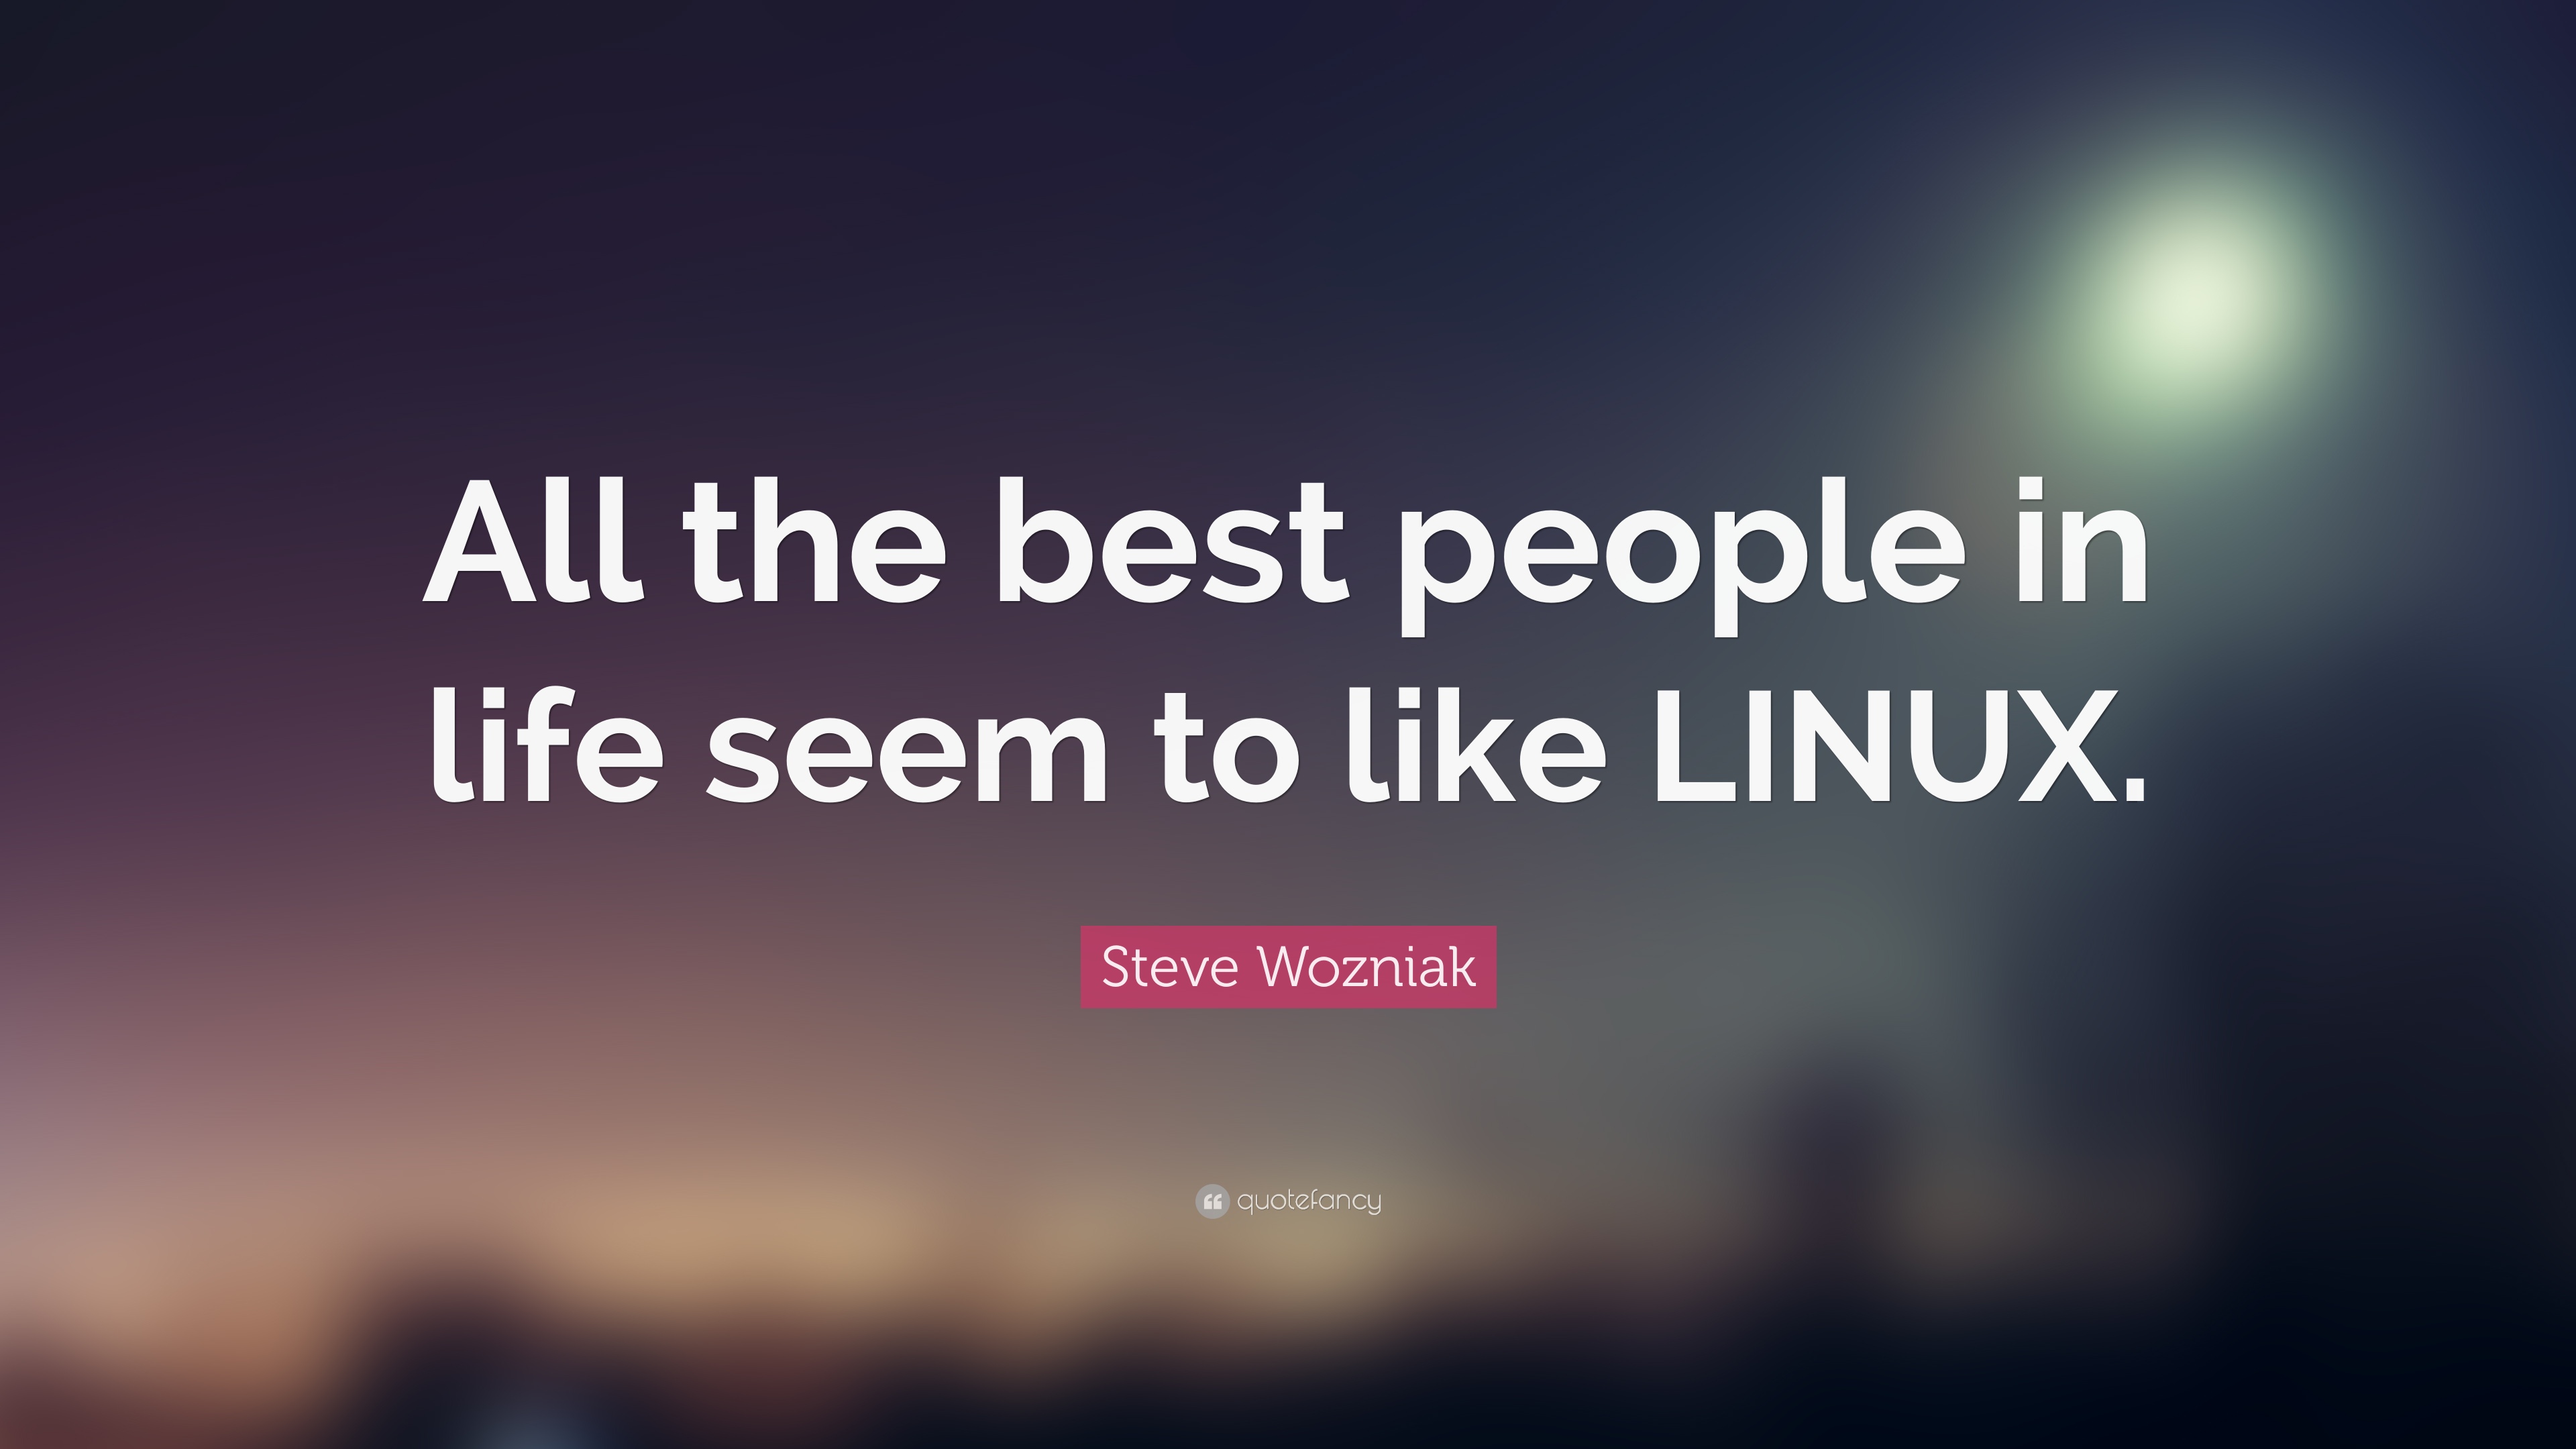 Steve Wozniak Quotes (2022 Update)